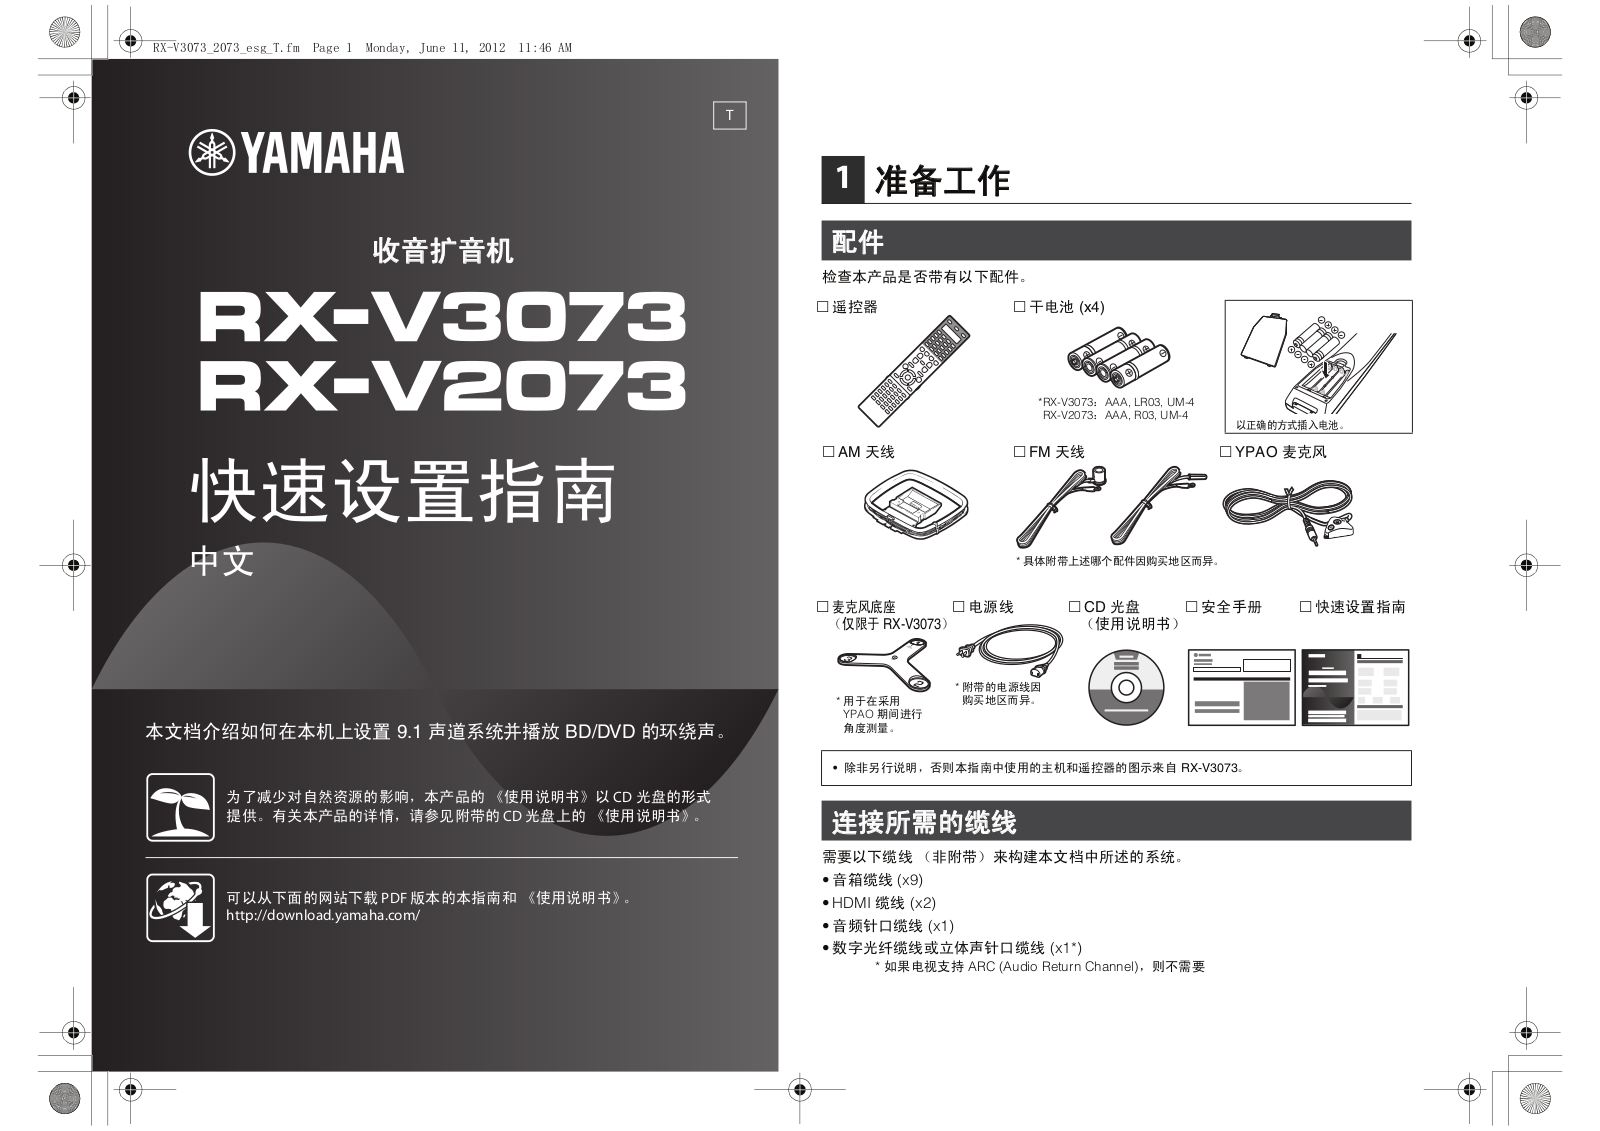 Yamaha RX-V3073 Setup Guide